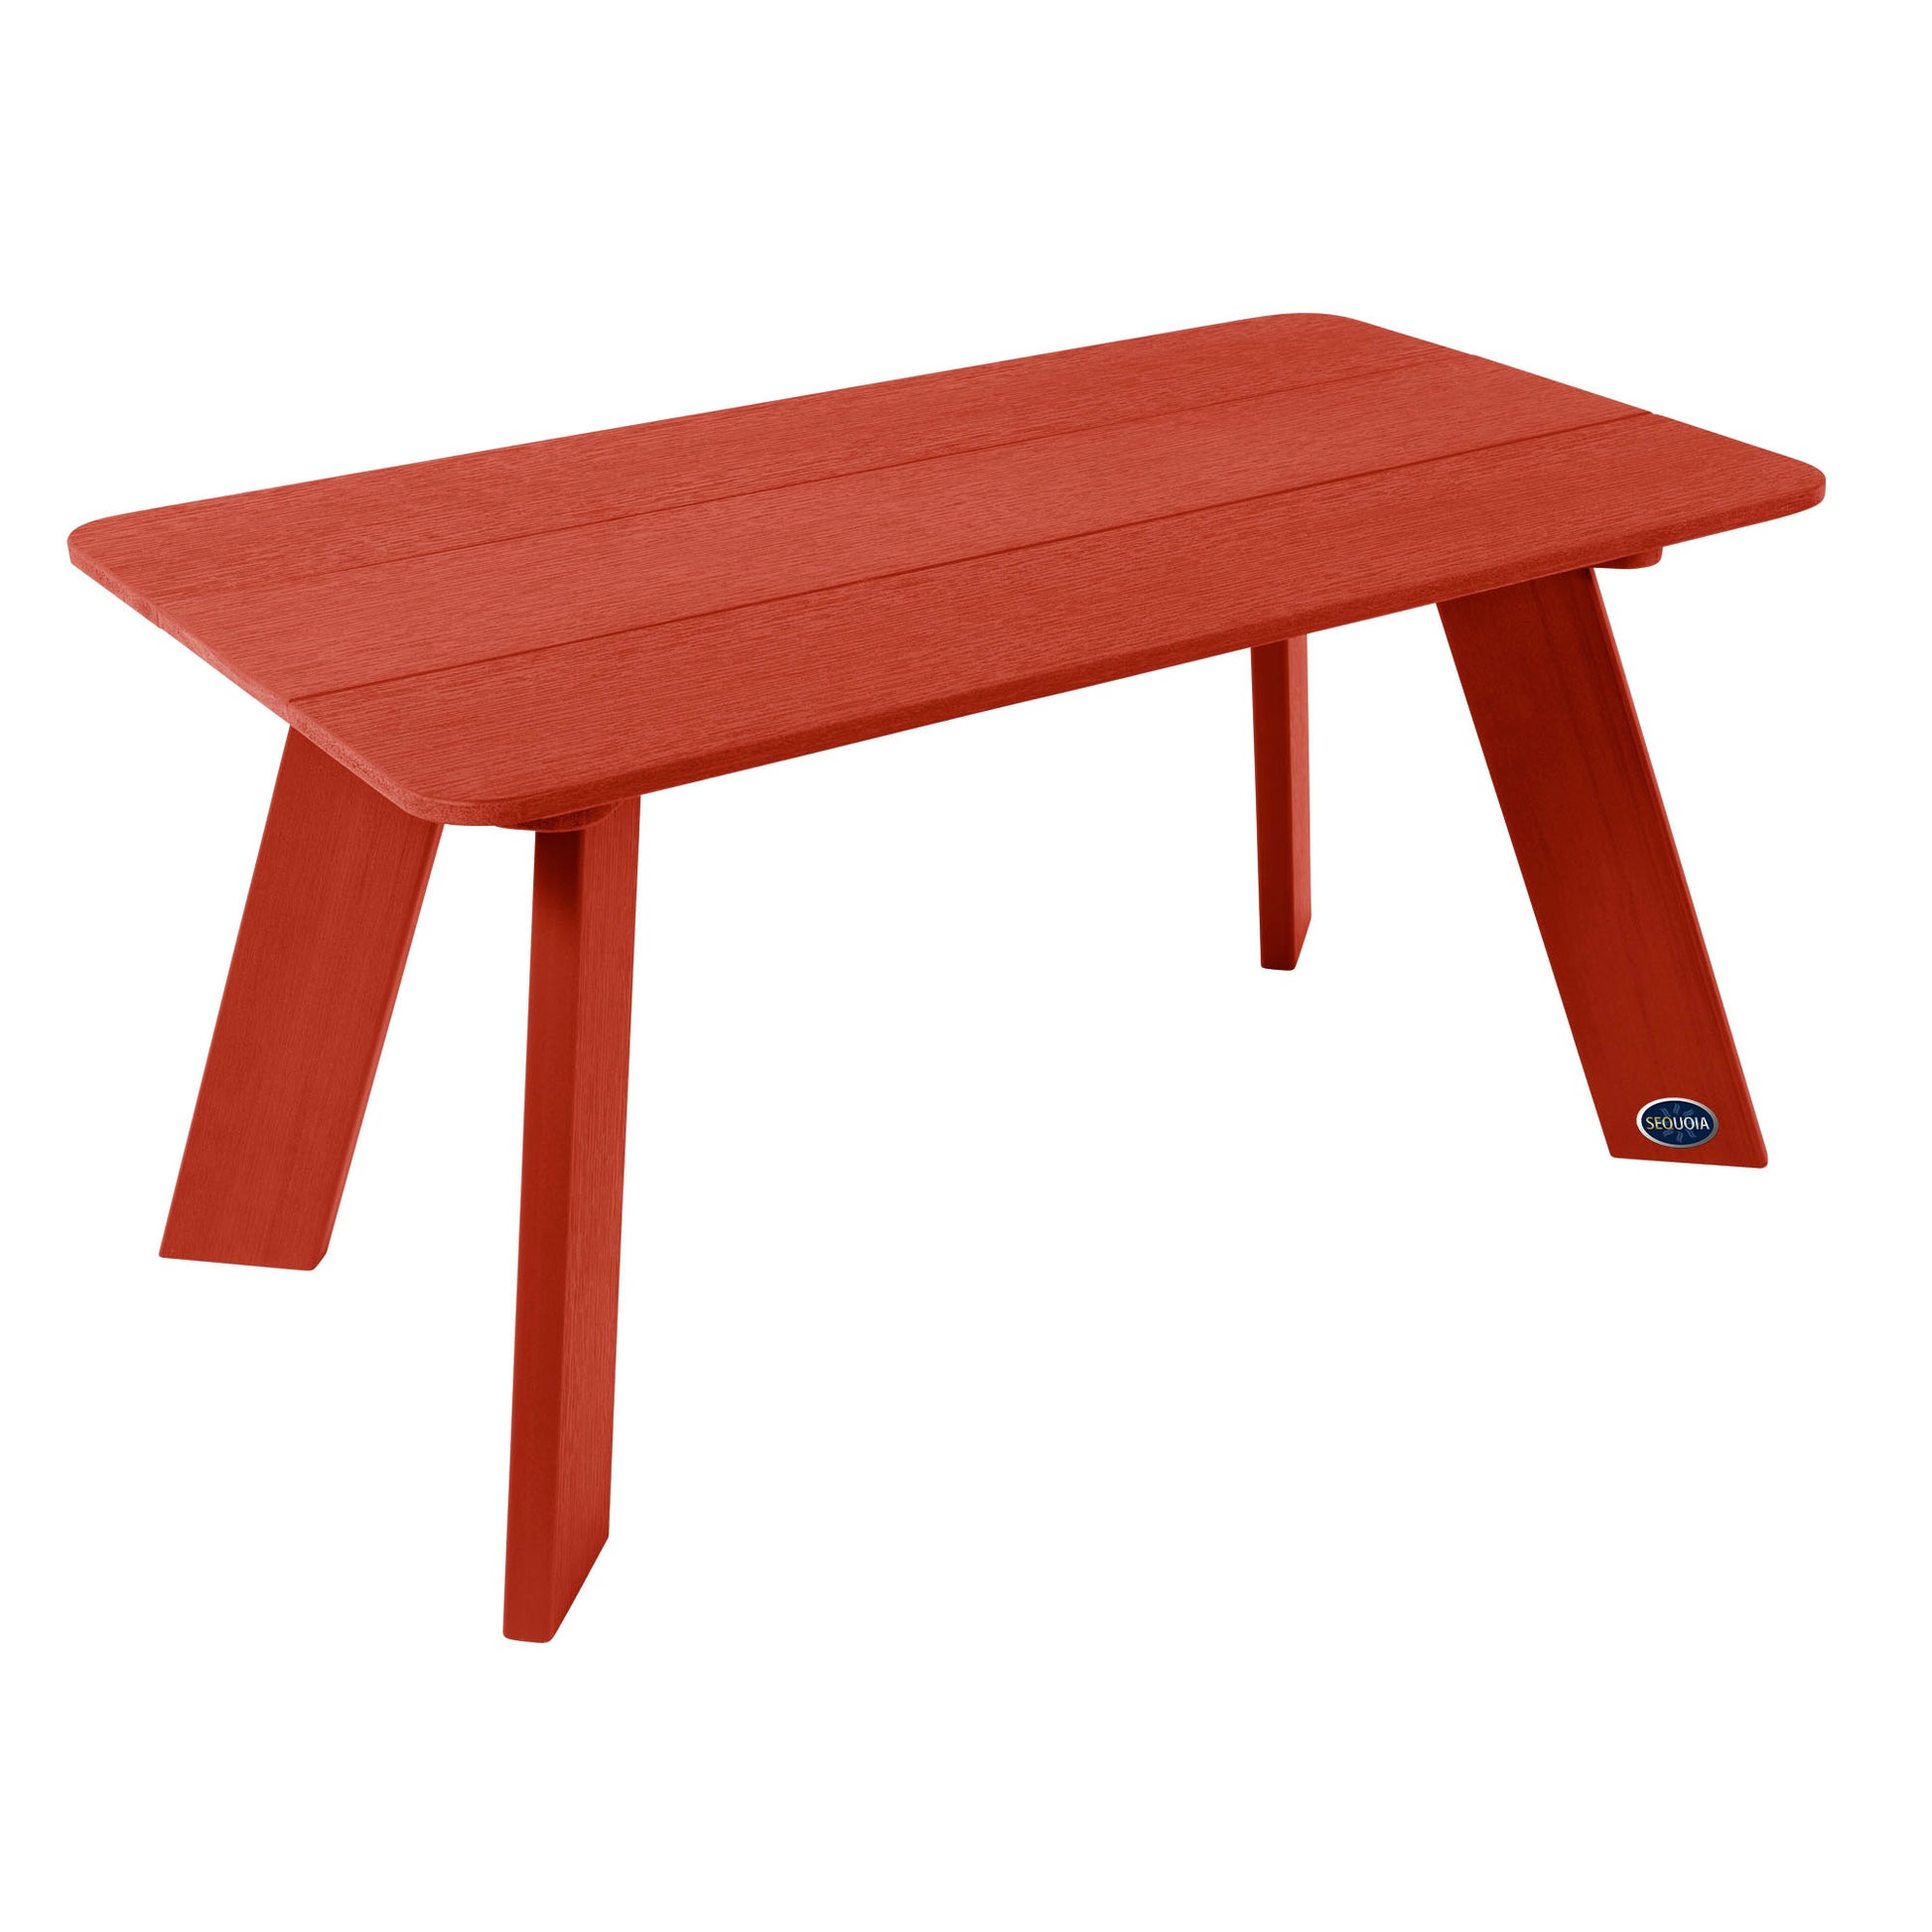 Granite Hills Modern coffee table in Rustic Red